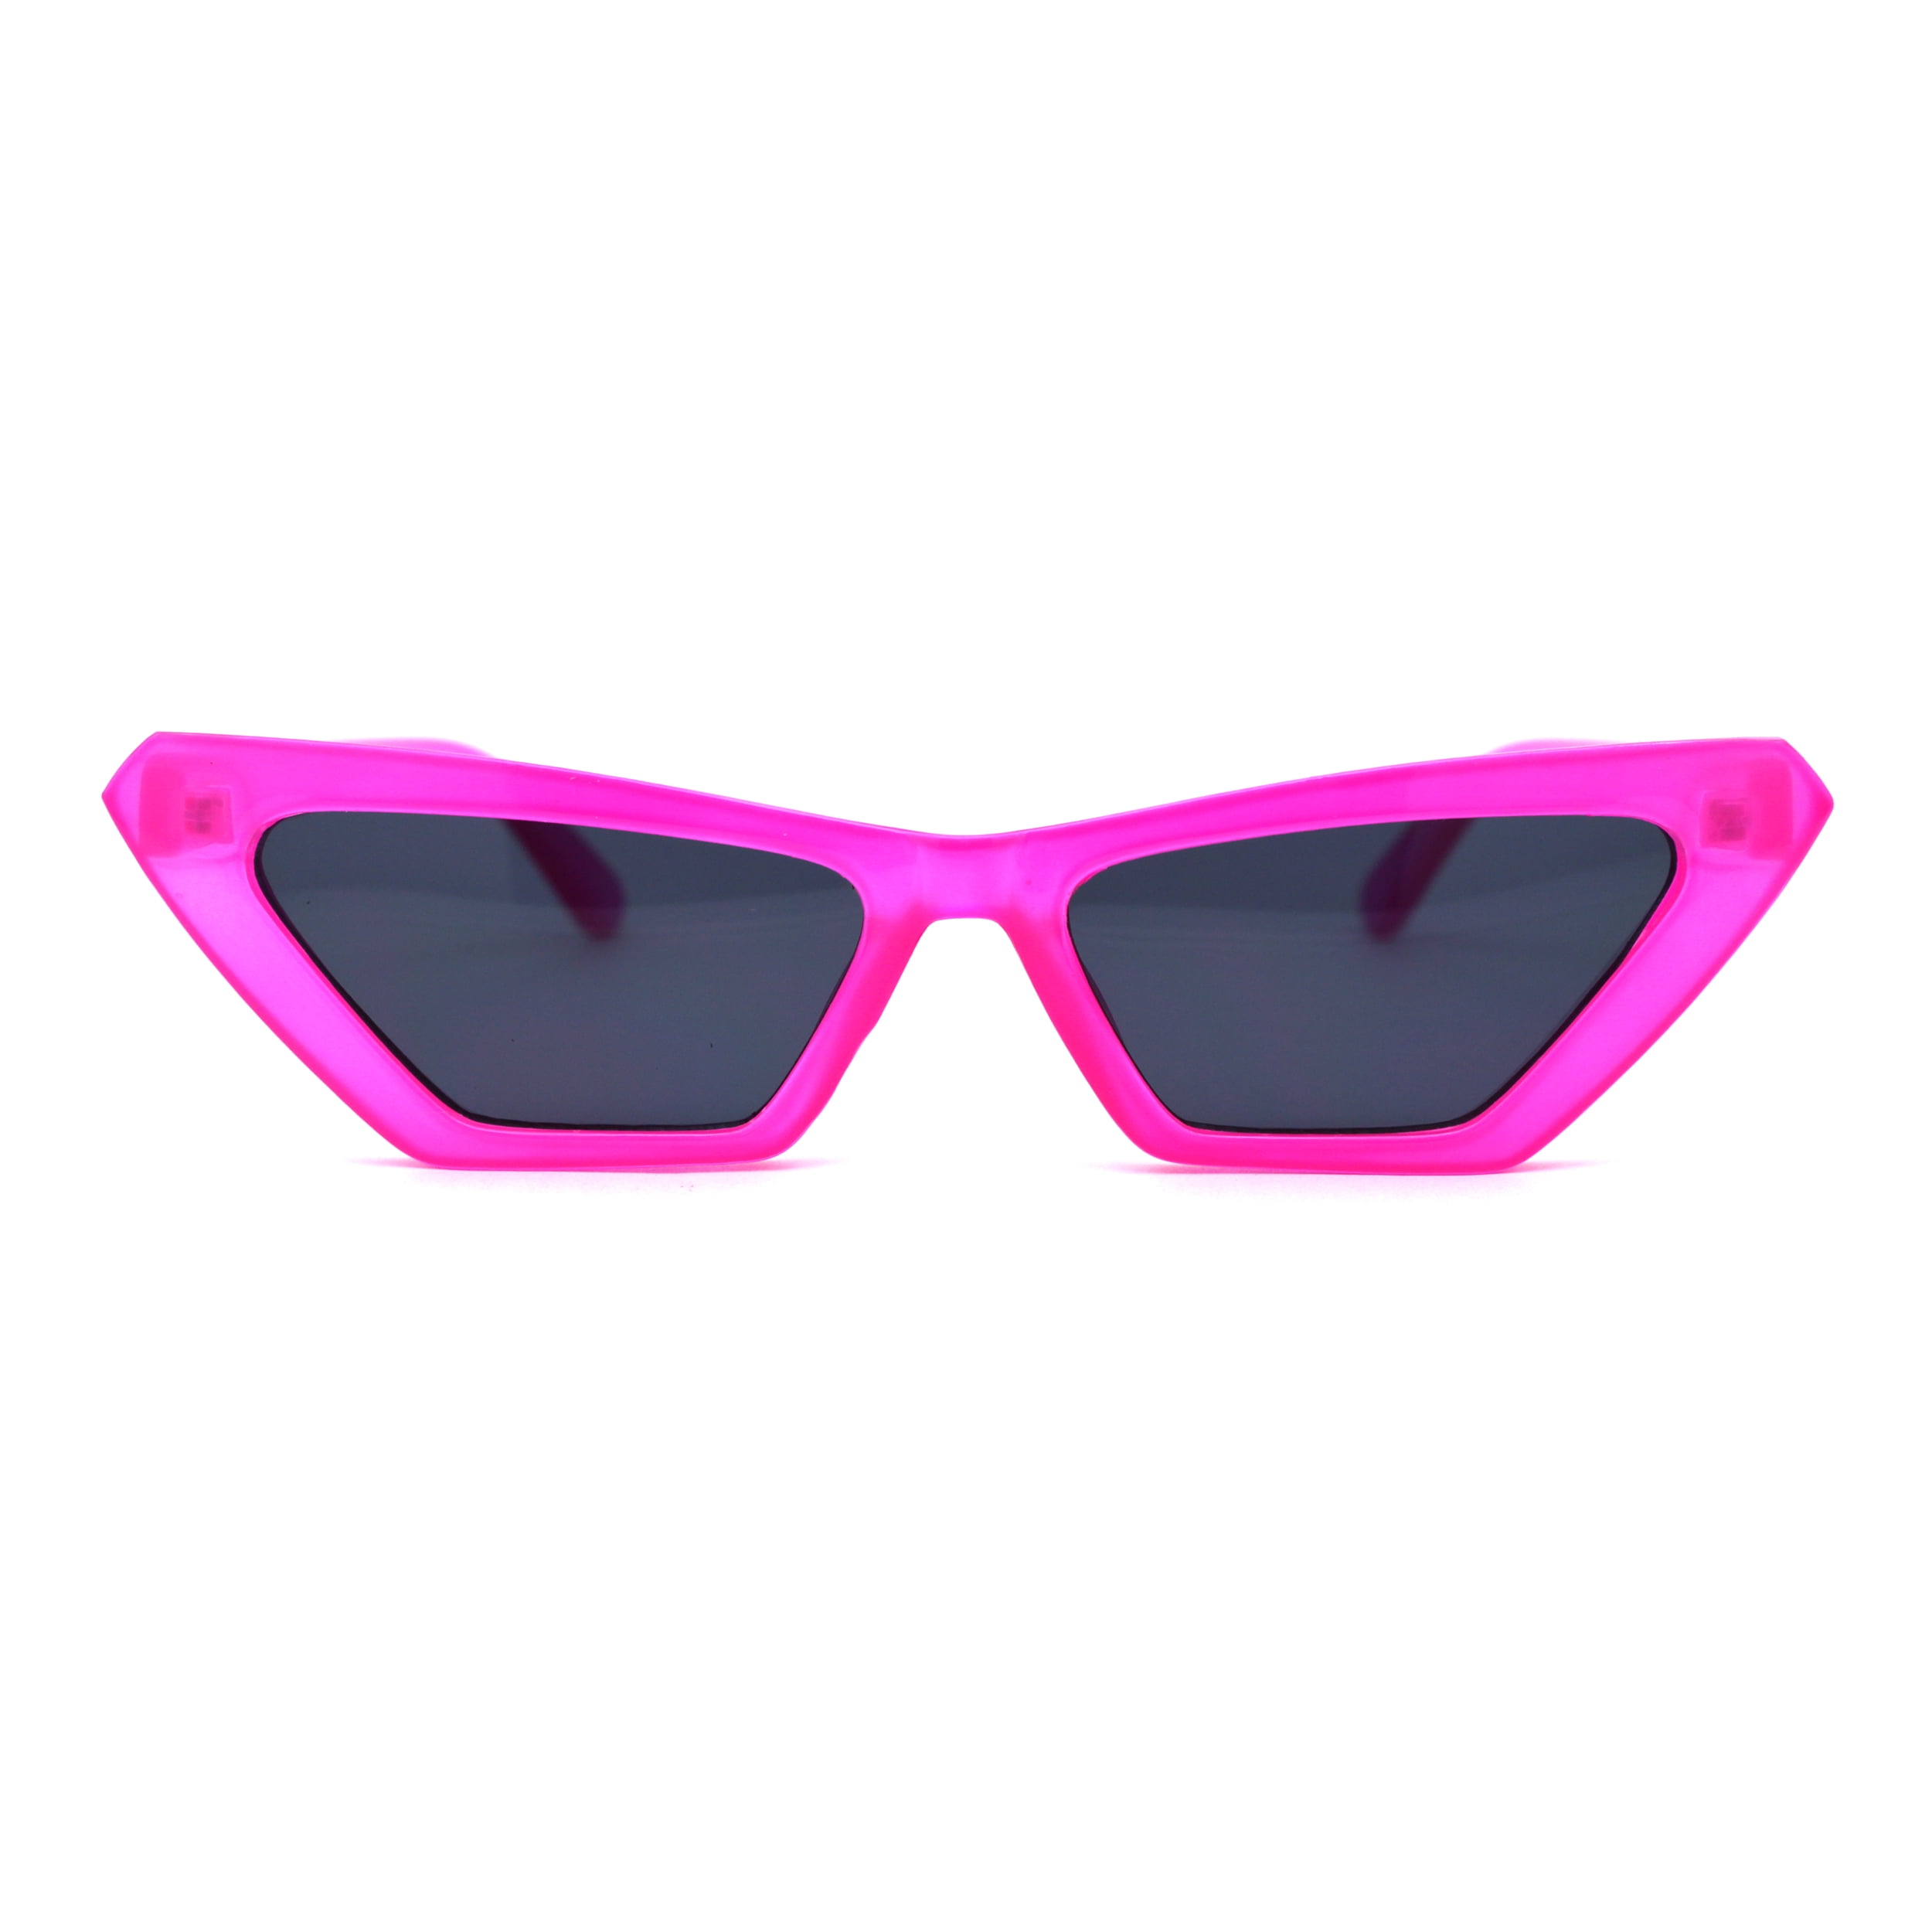 Children\u2019s fruit print sunglasses 80s to 90s vintage deadstock kids multicolored sunnies